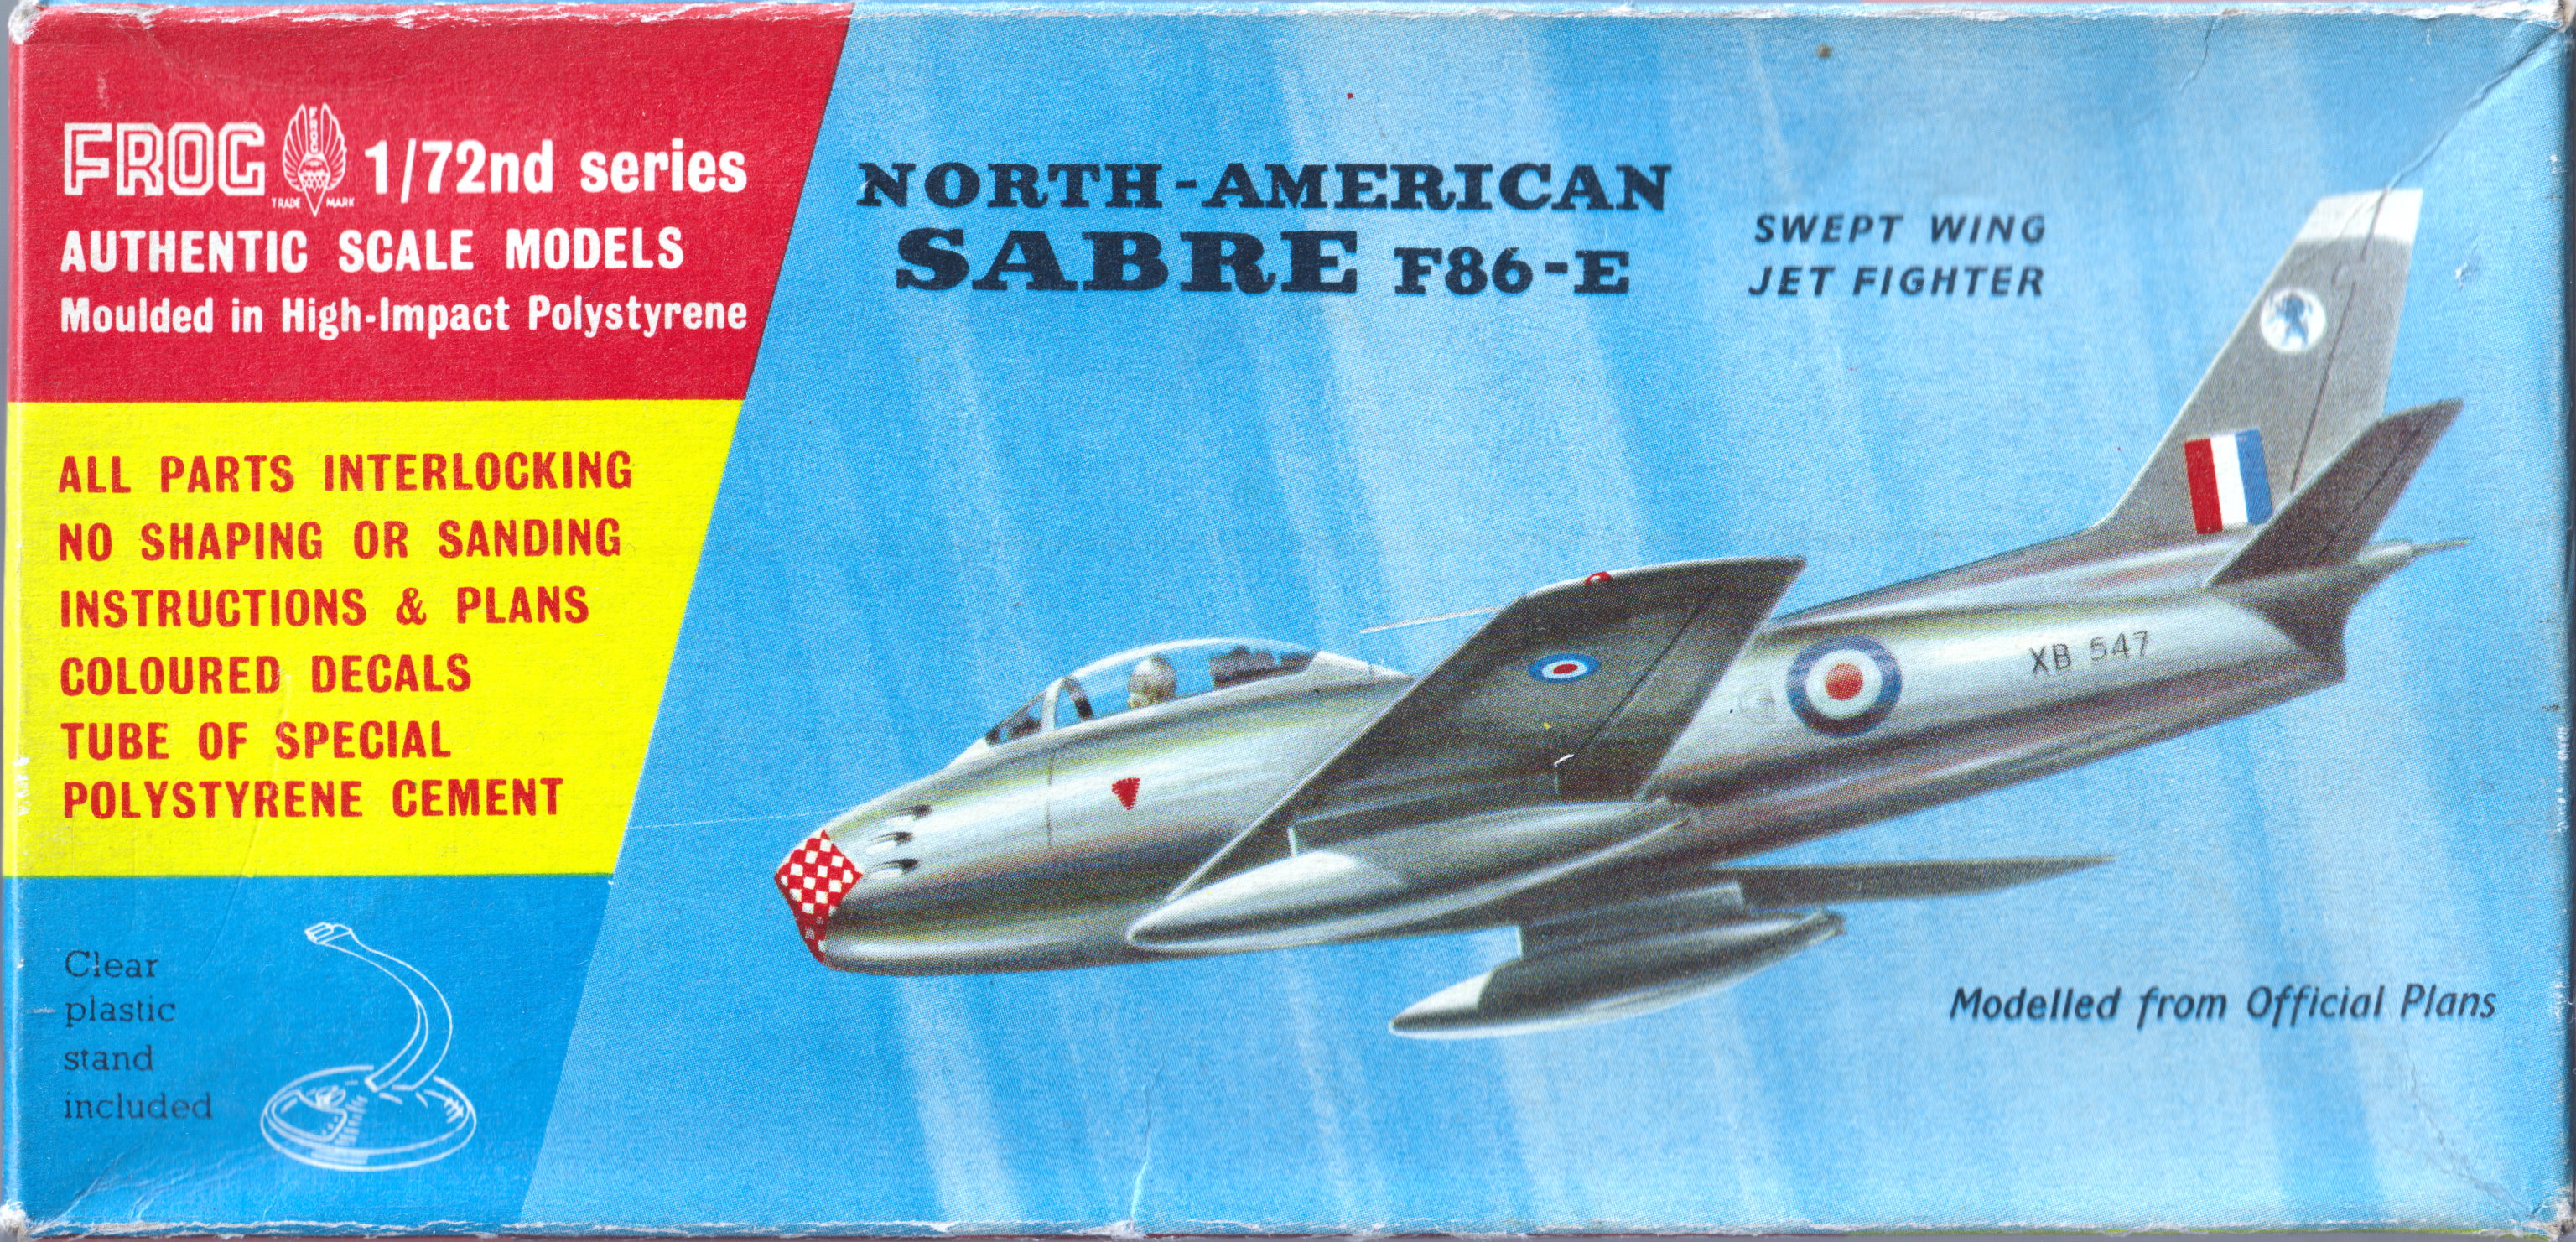 FROG 321P North American Sabre F-86E Swept Wing Jet Fighter, IMA, 1956 full telescopic type box